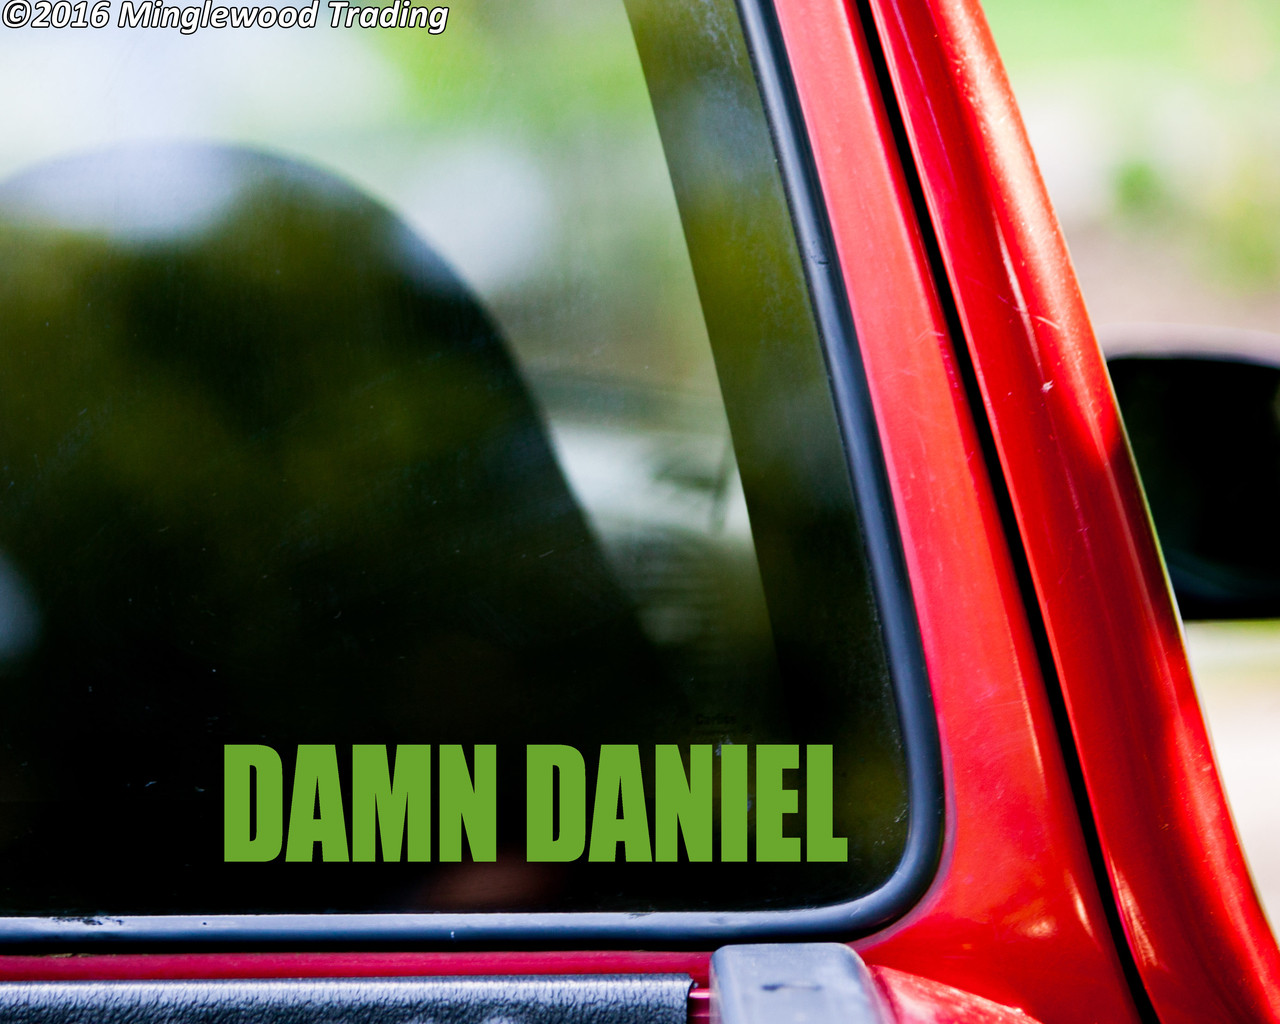 DAMN DANIEL   Vinyl Decal Sticker - Car Window Sticker Meme